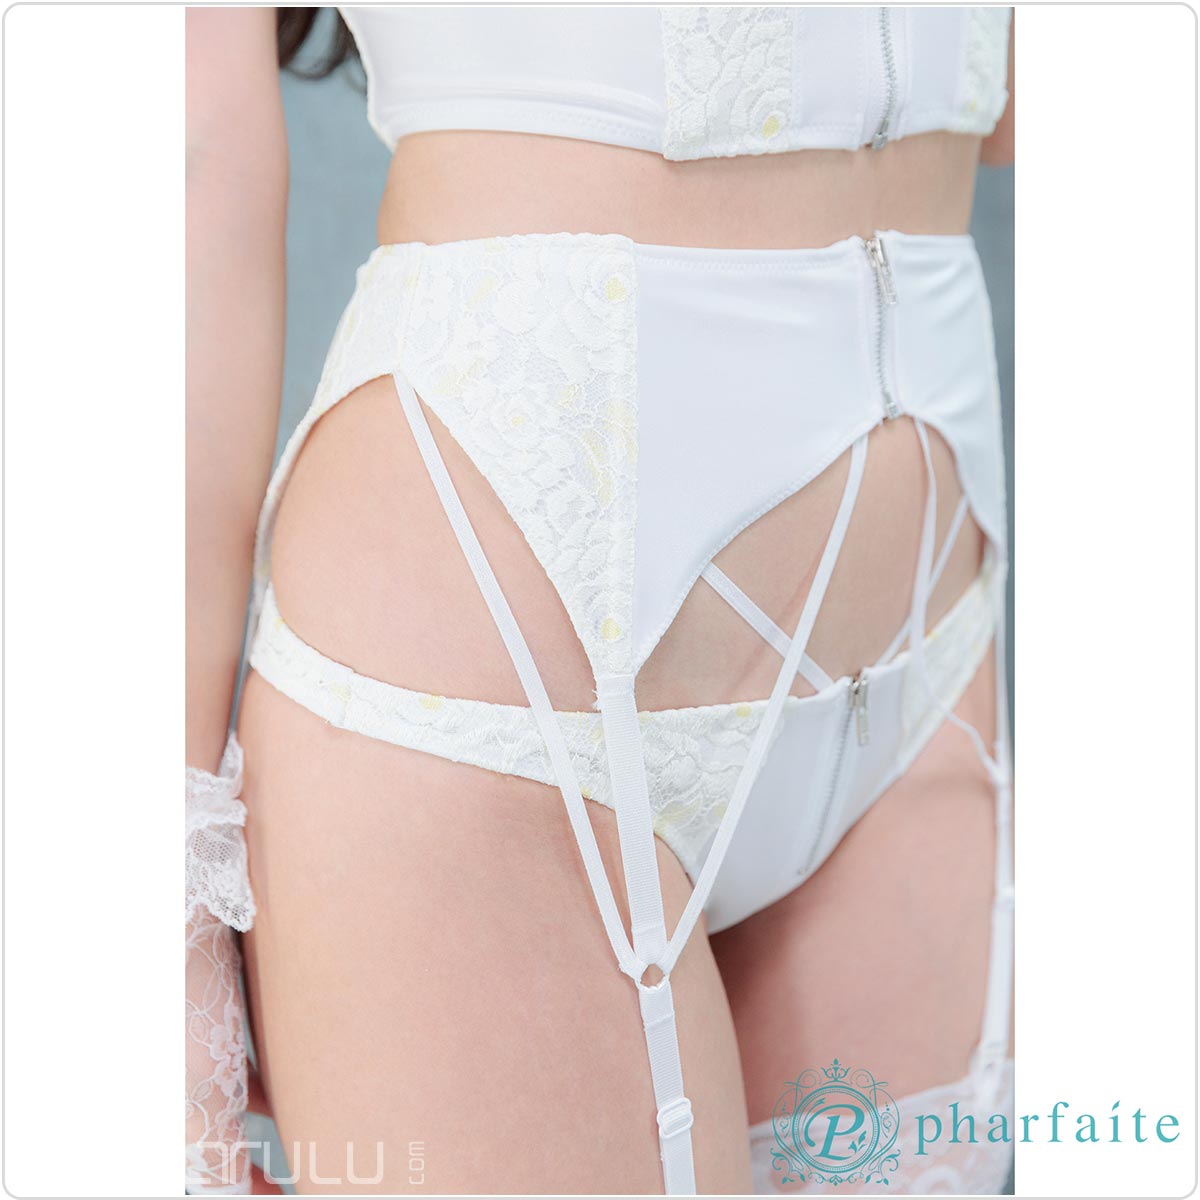 pharfaite pf530 sgs wetlook and lace bondage lingerie pf530 white